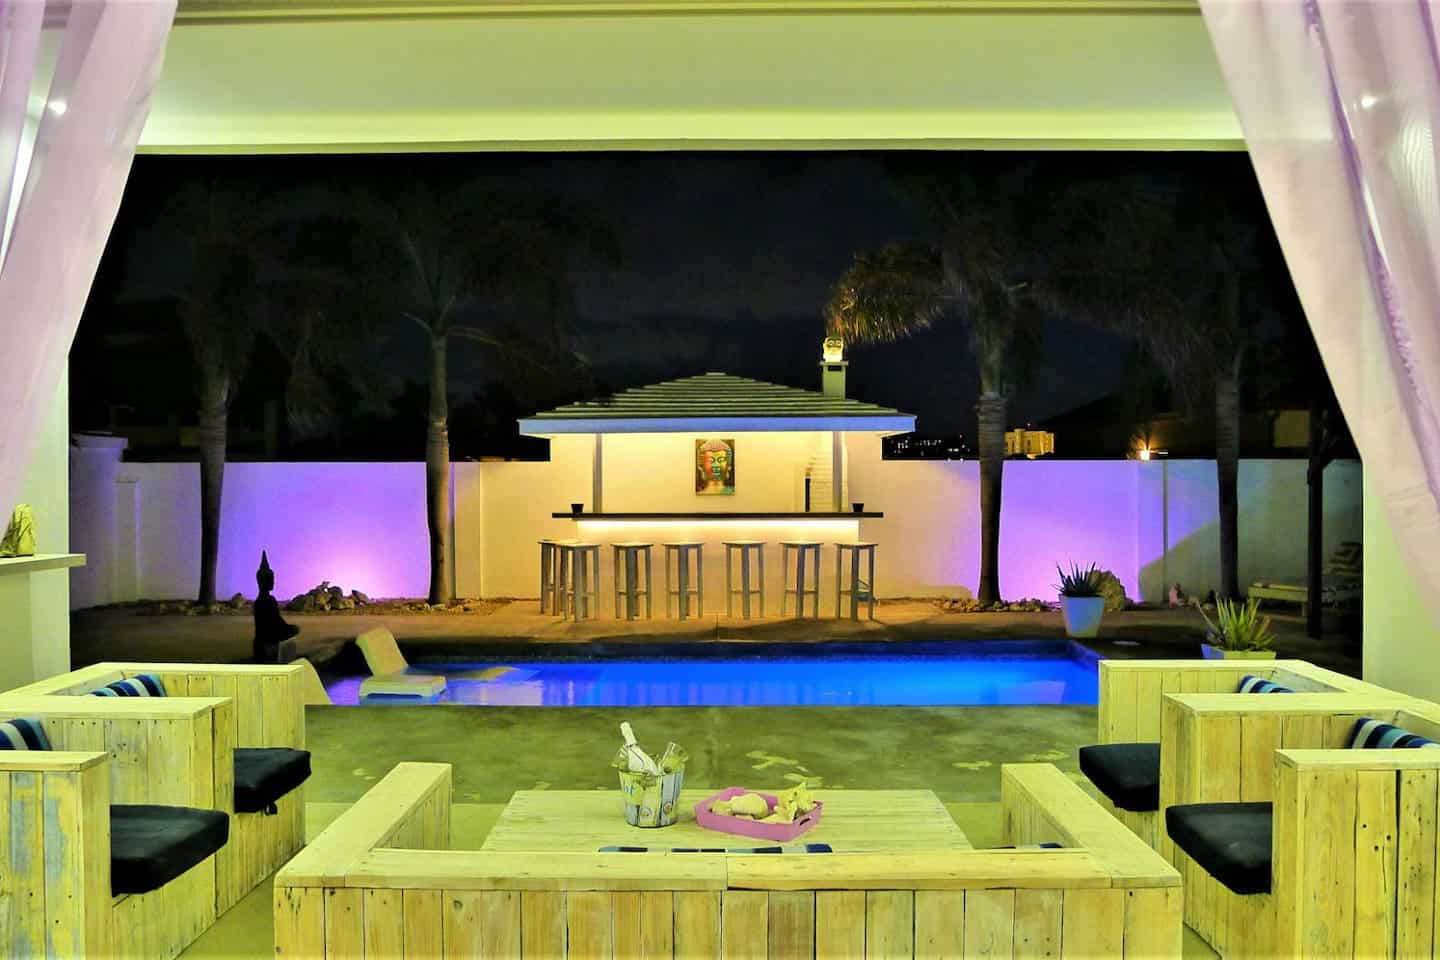 Image of Airbnb rental in Aruba